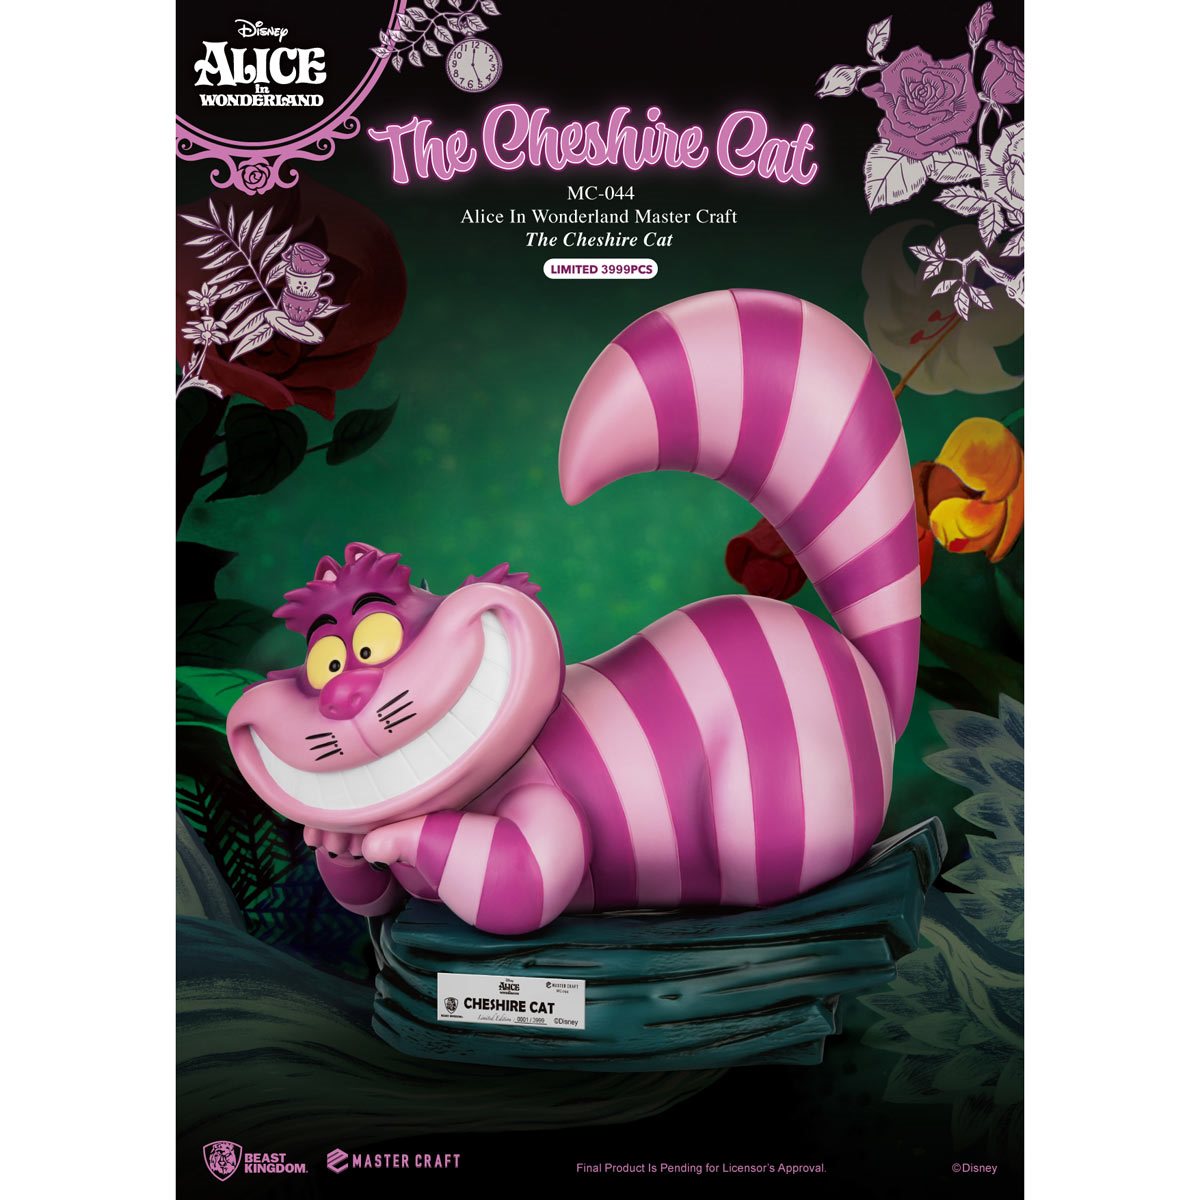 Disney Alice In Wonderland Master Craft Alice Special Edition (Master Craft)